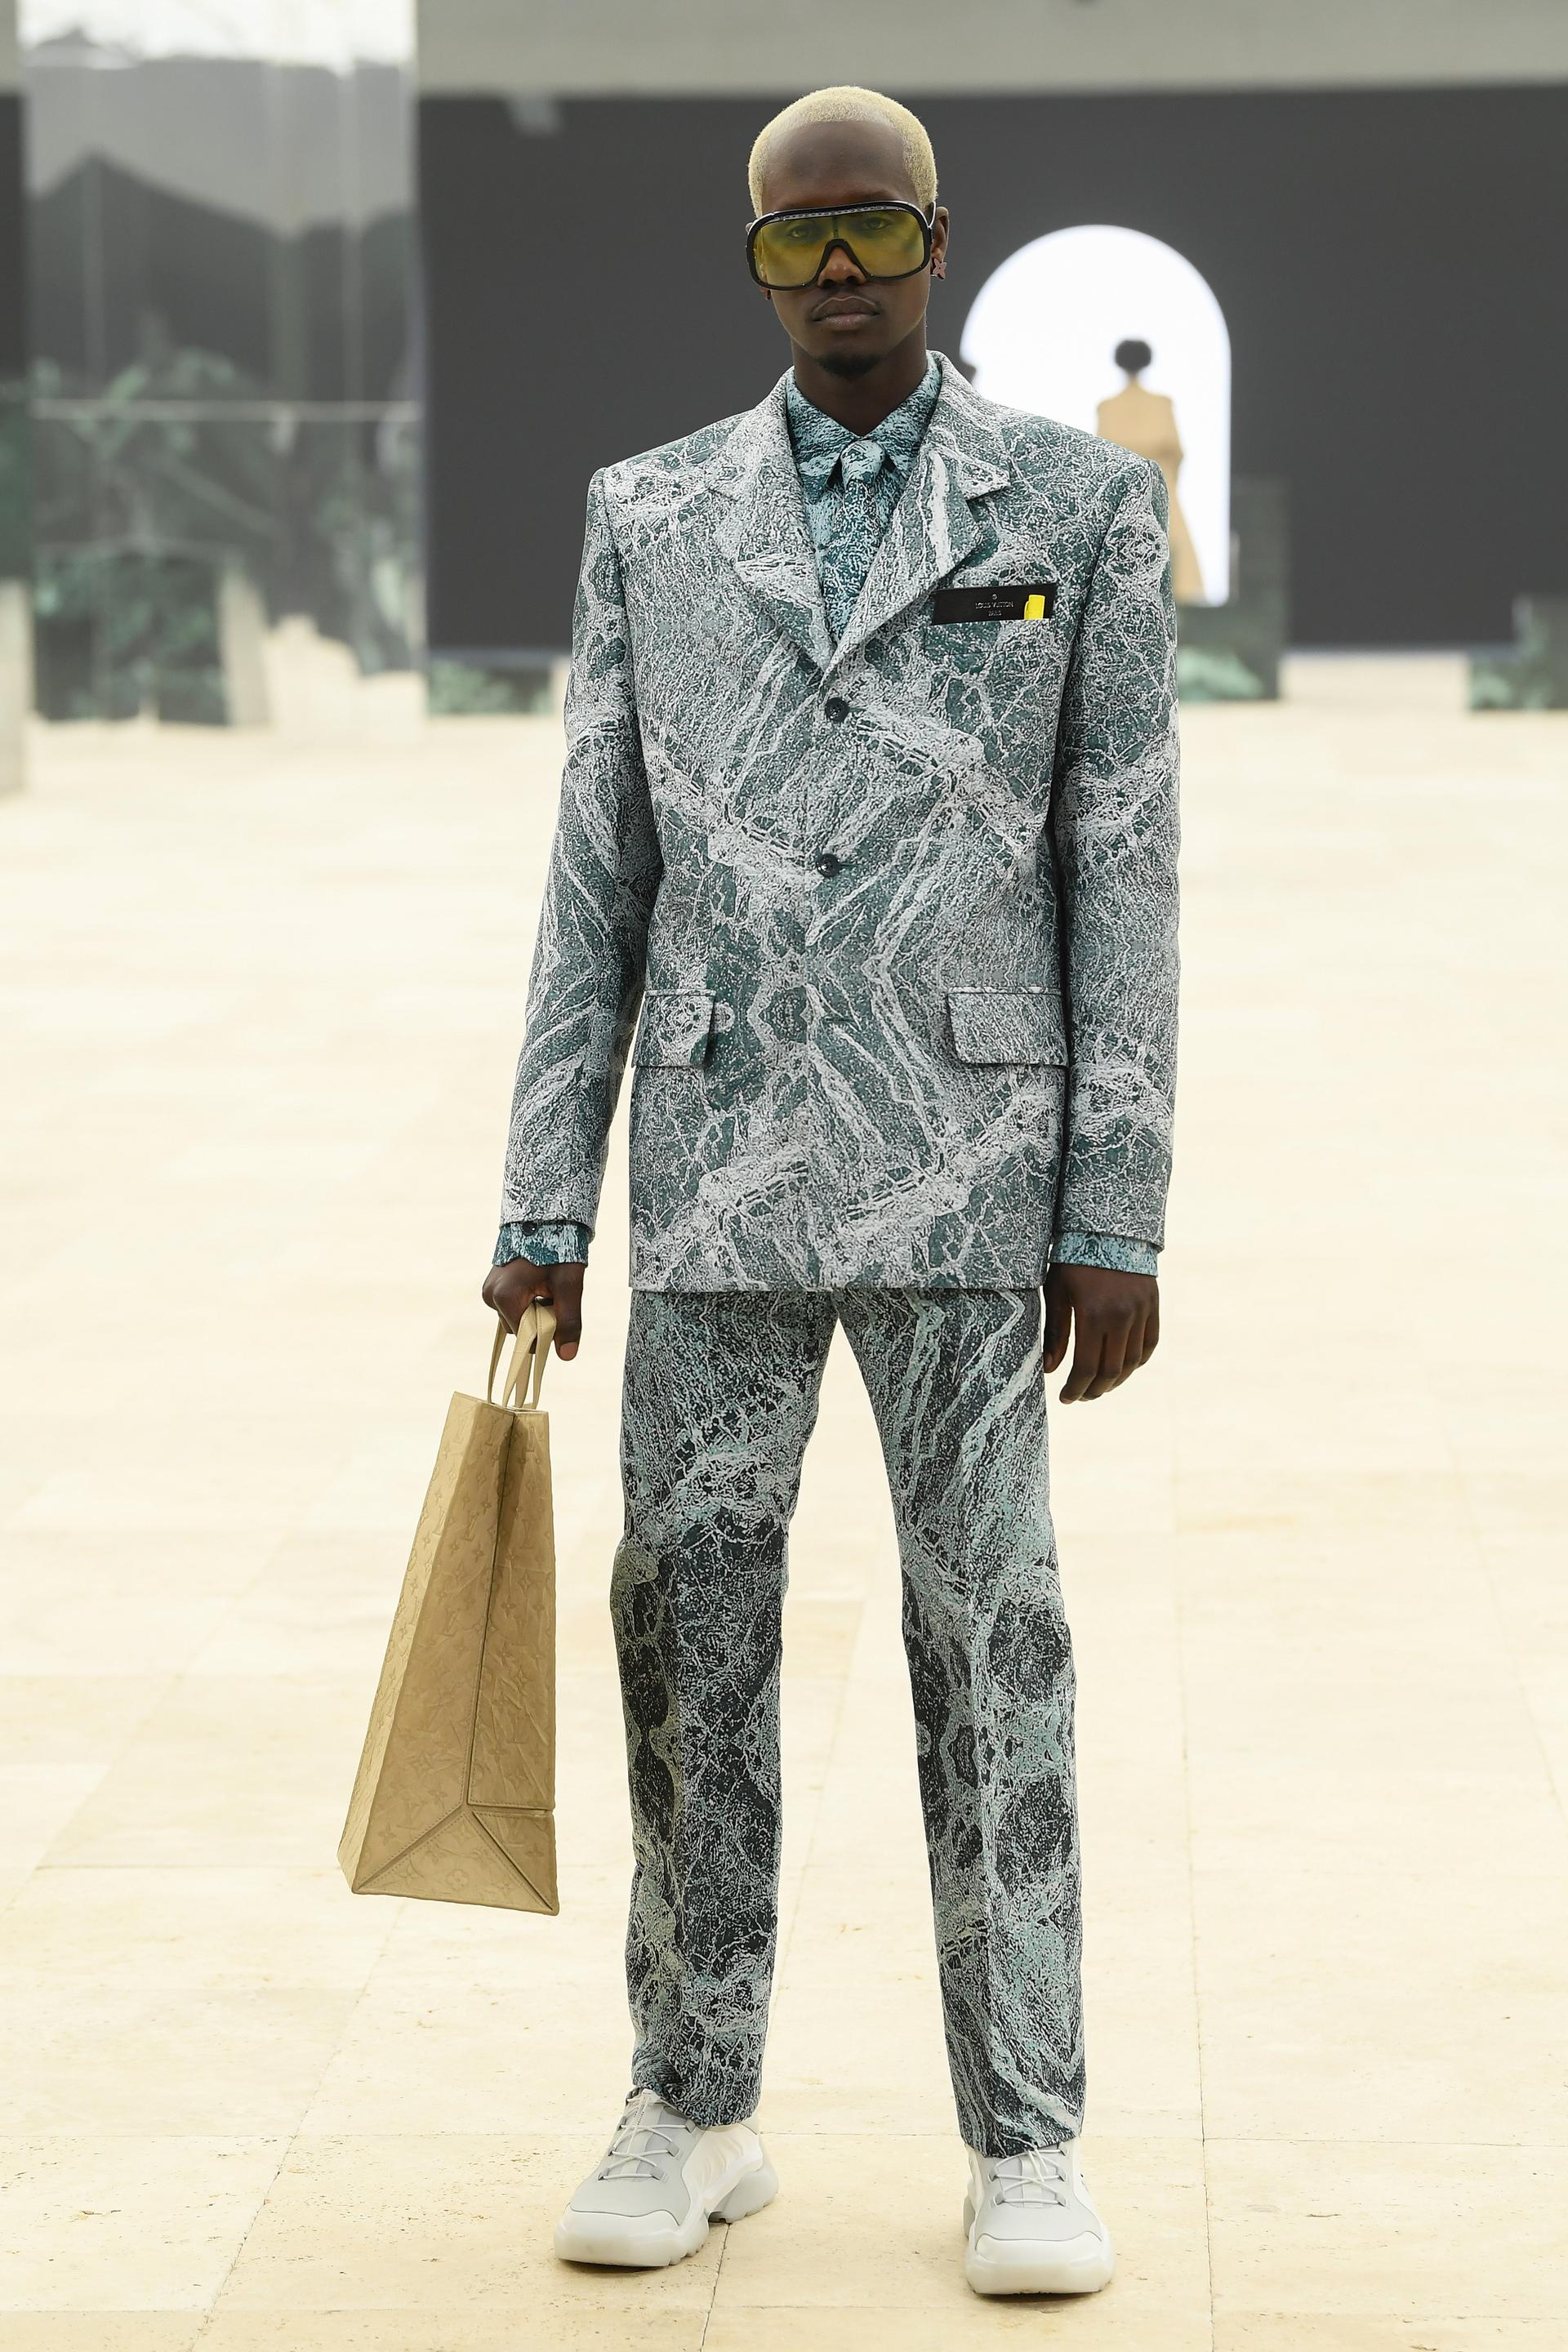 Virgil Abloh Makes His Return To Louis Vuitton